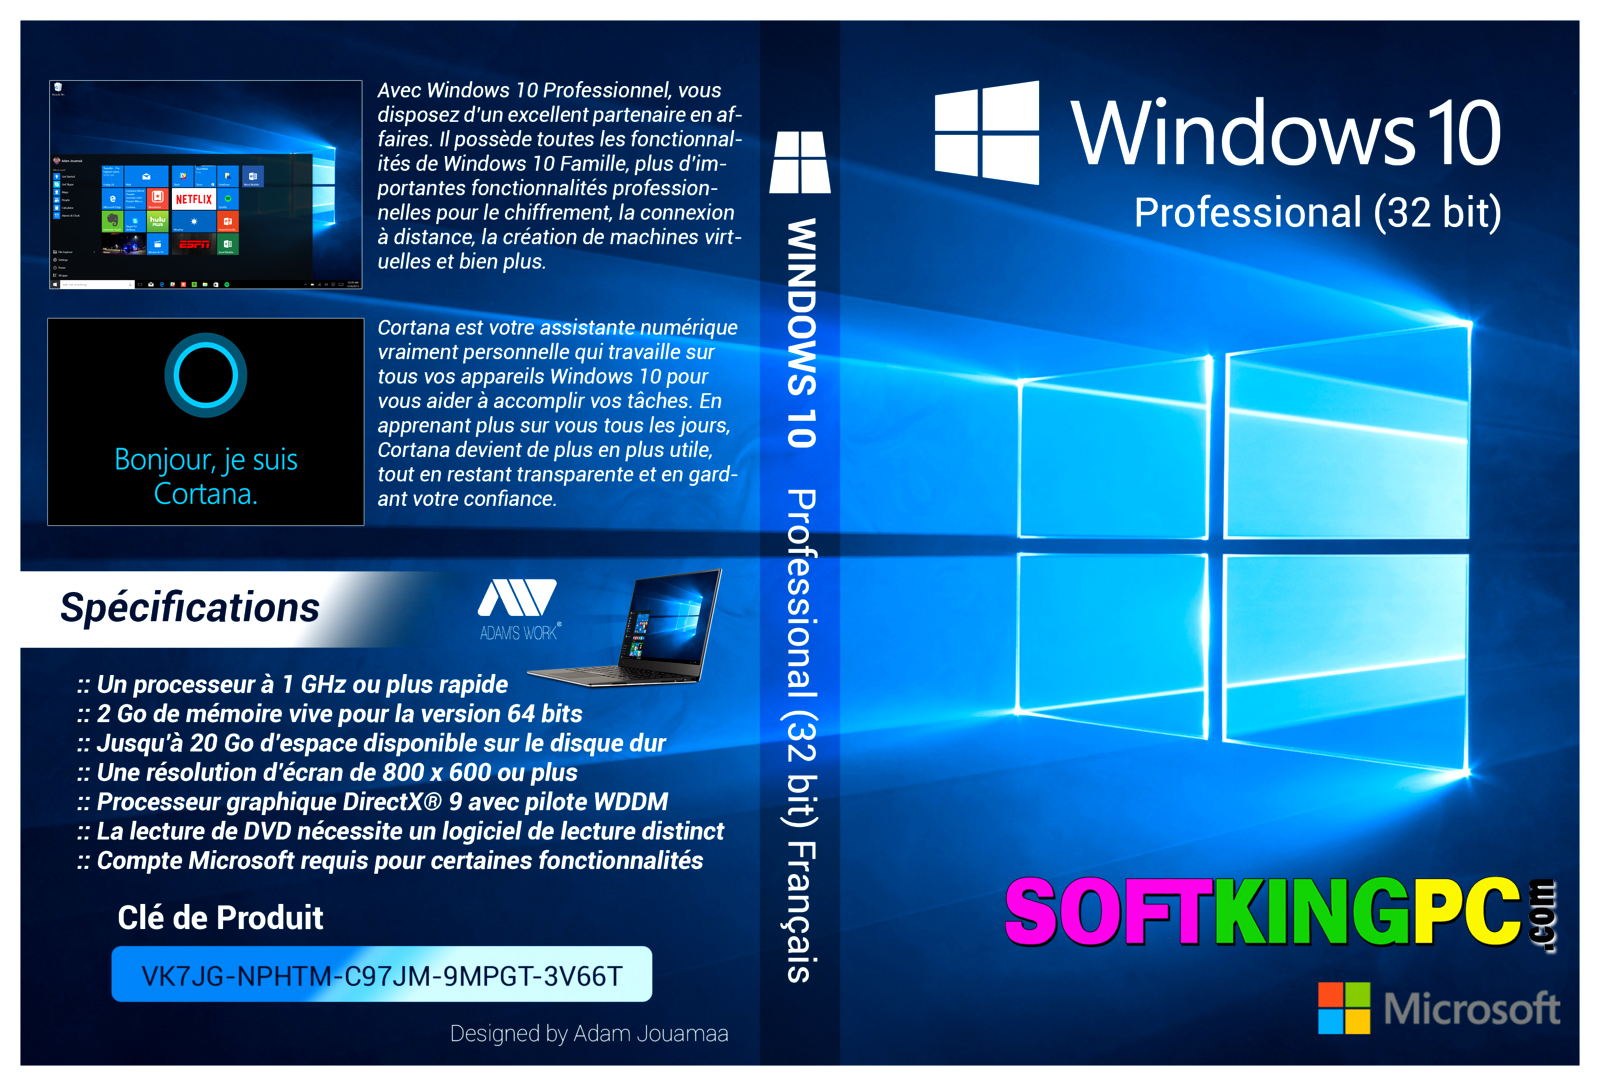 32 bit windows 10 downlad internet download manager patch file 6.15 free download